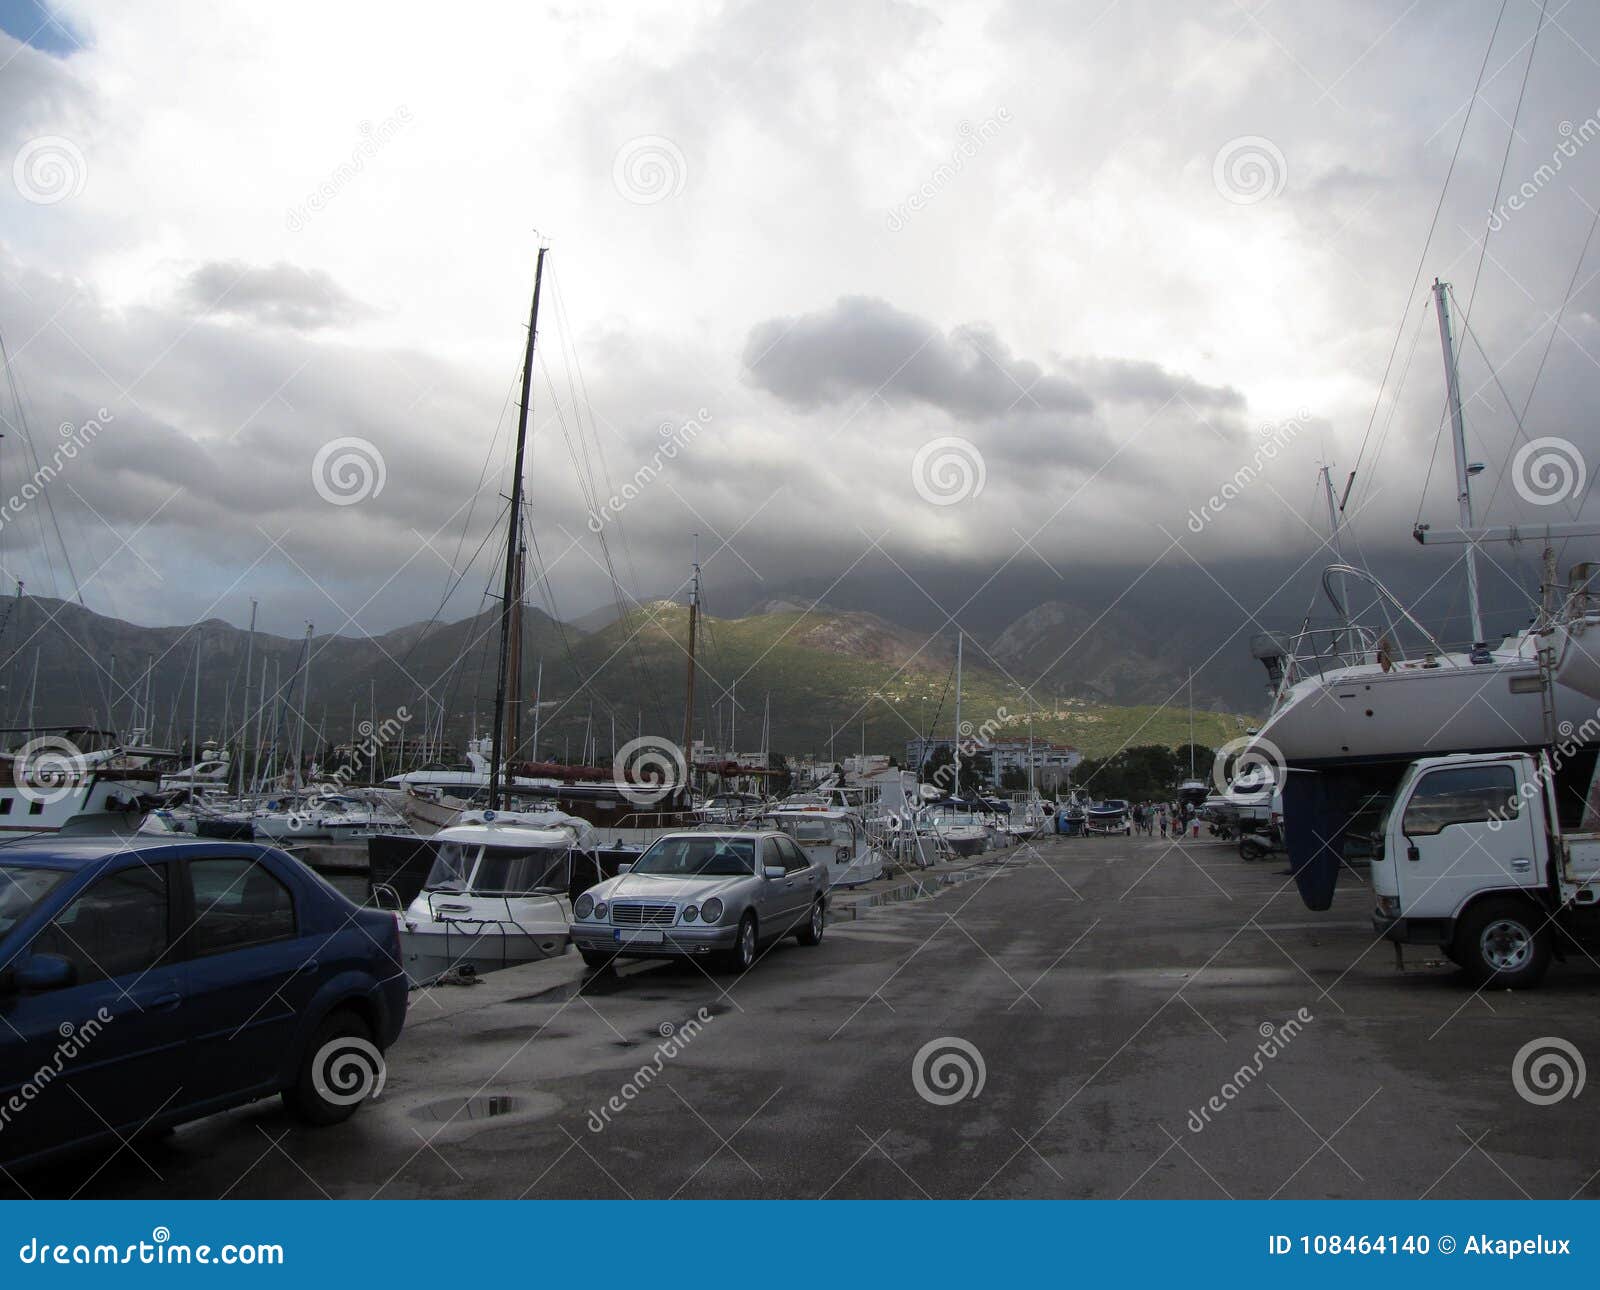 yacht marina po sztormie w montenegro.